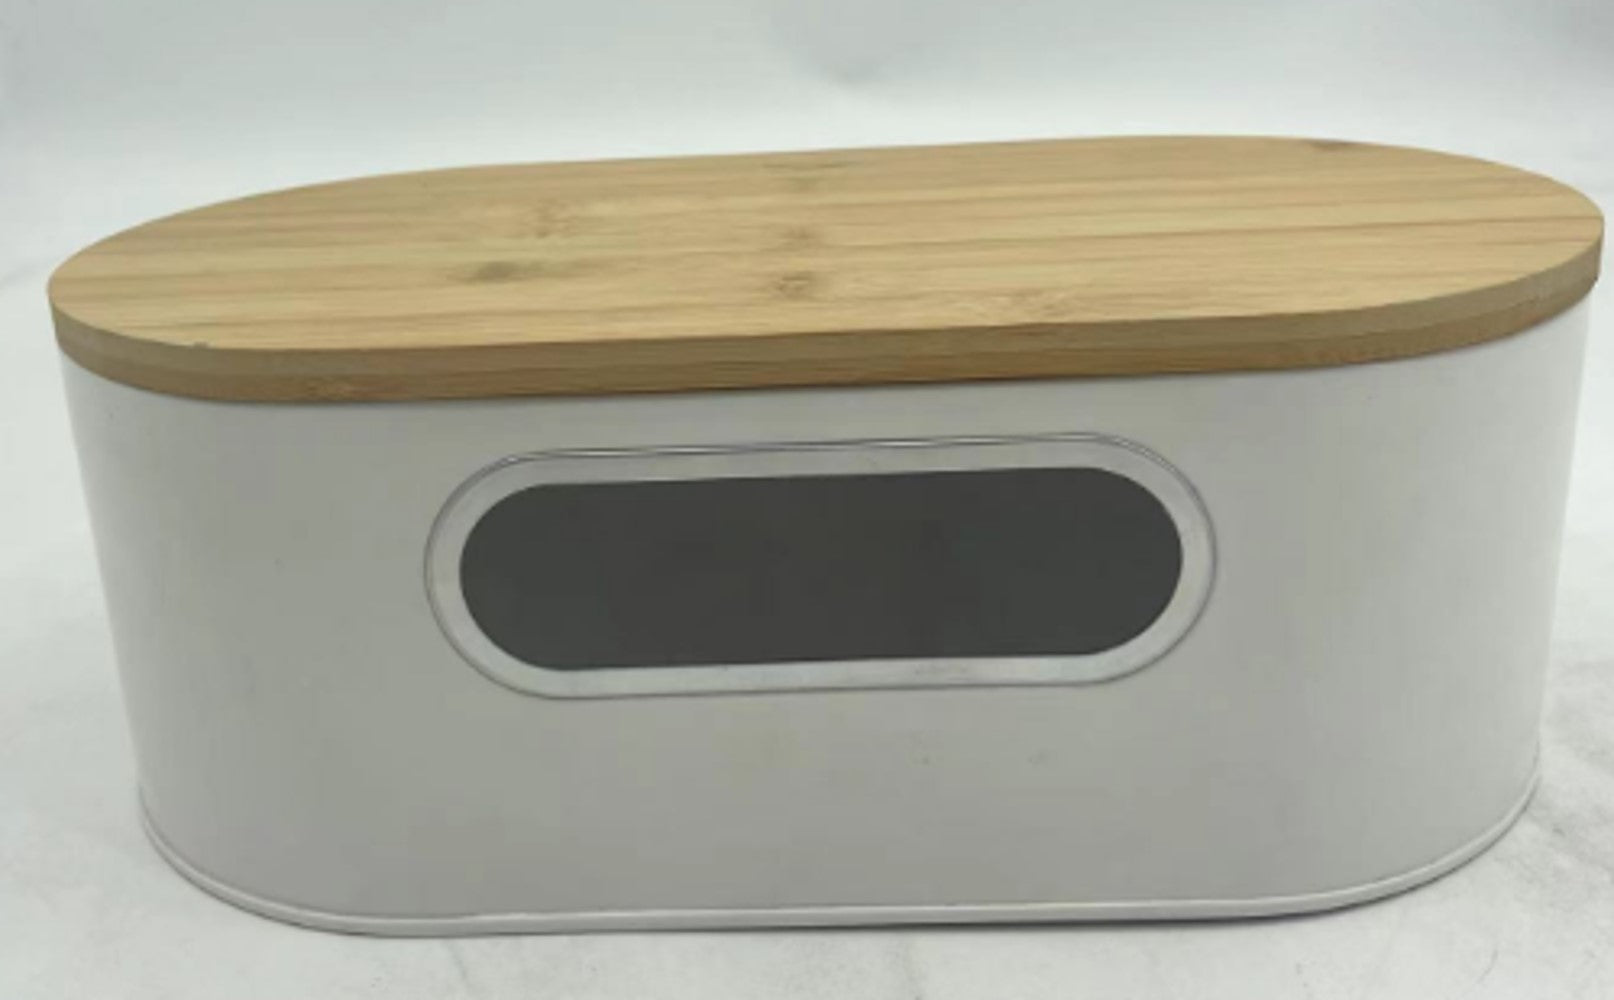 Beige Metal Bread Box with Bamboo Cutting Board Lid, 13.2"